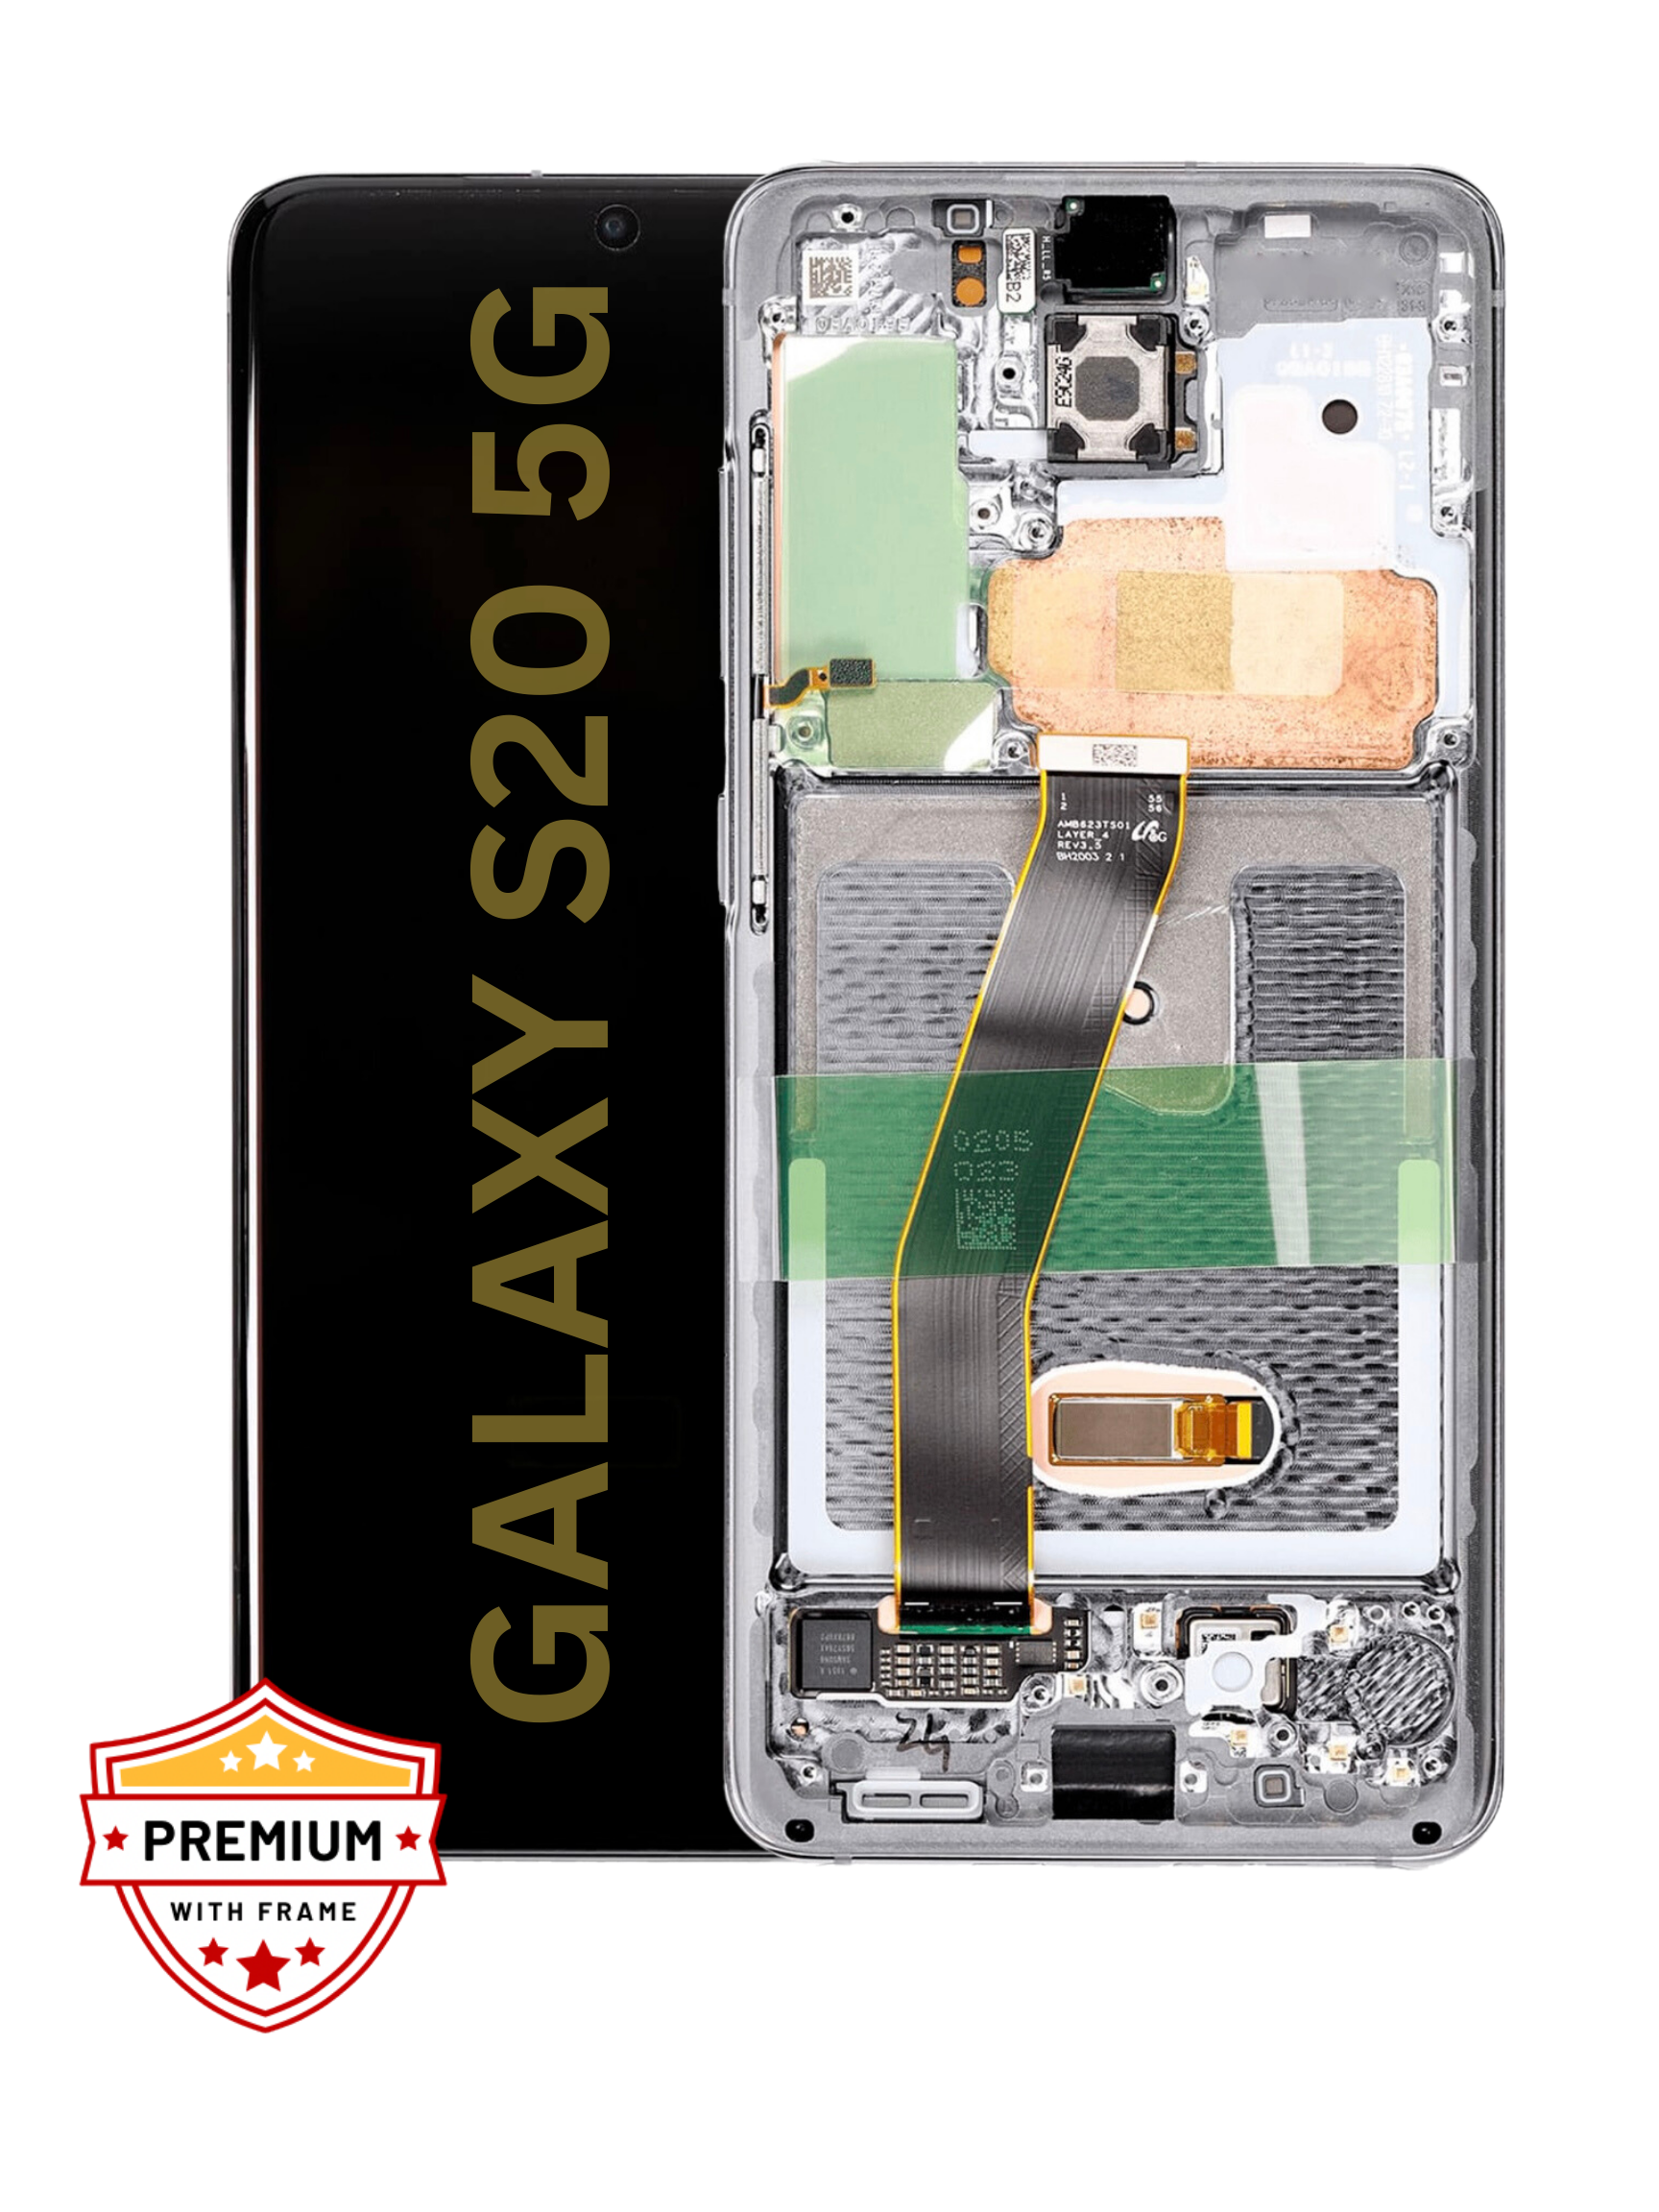 (Refurbished) Samsung Galaxy S20 OLED Display with Frame (Gray)